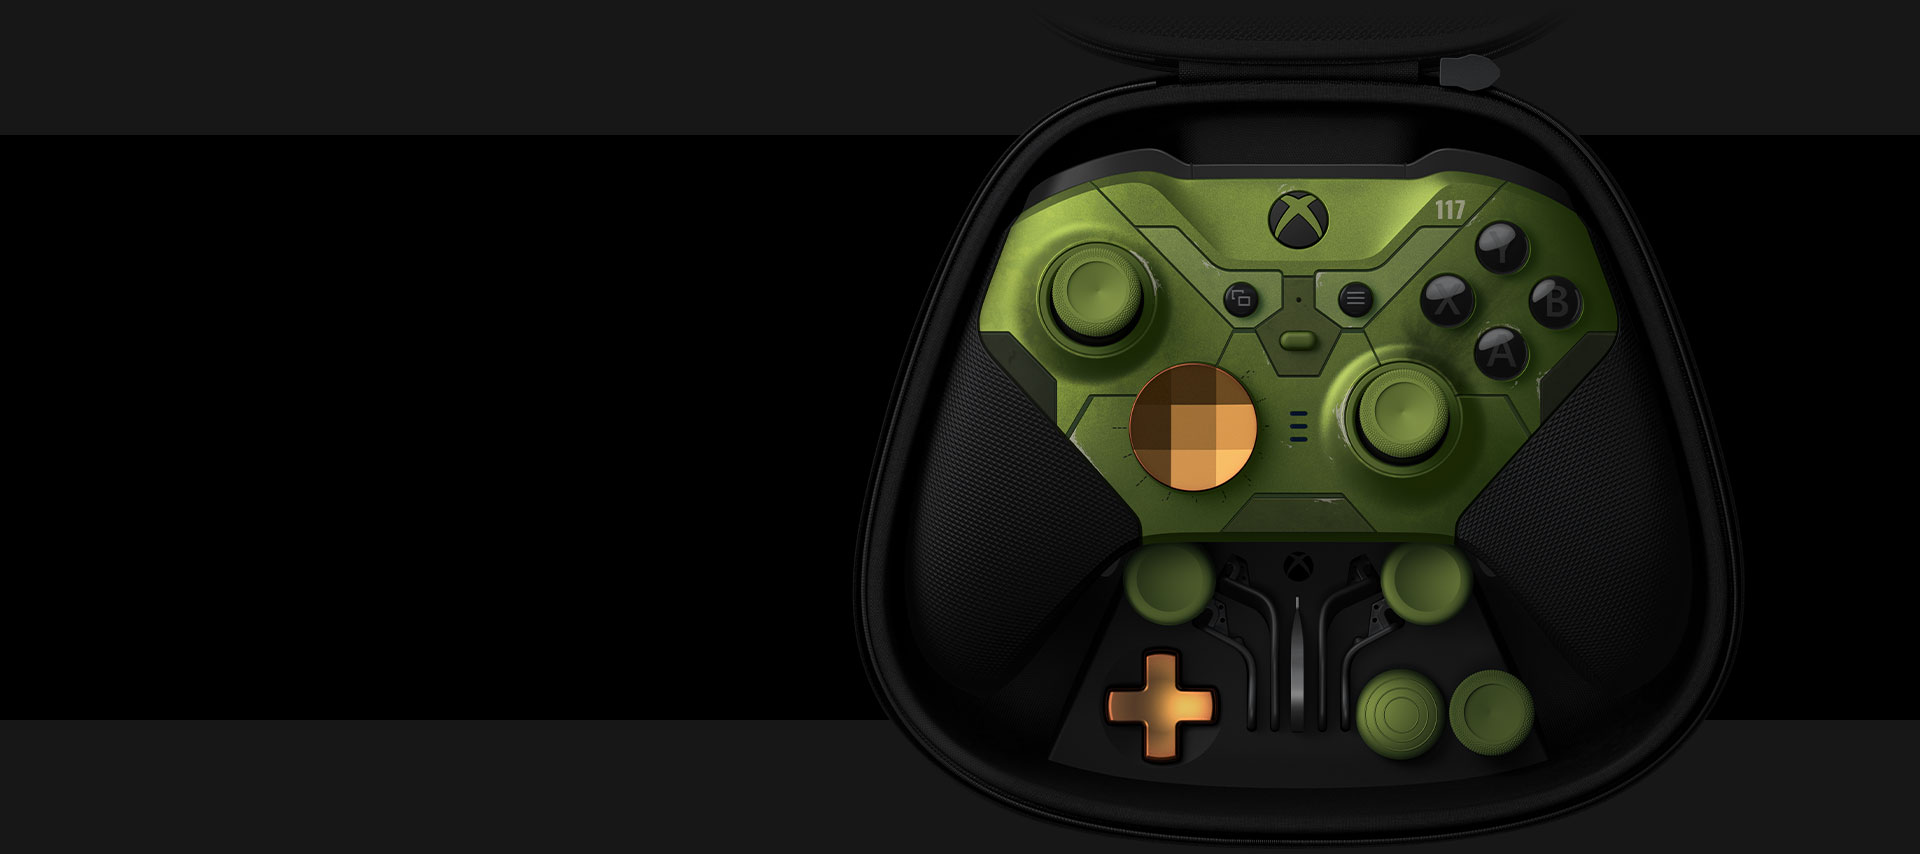 Xbox Elite ワイヤレス コントローラー シリーズ 2 Halo | www